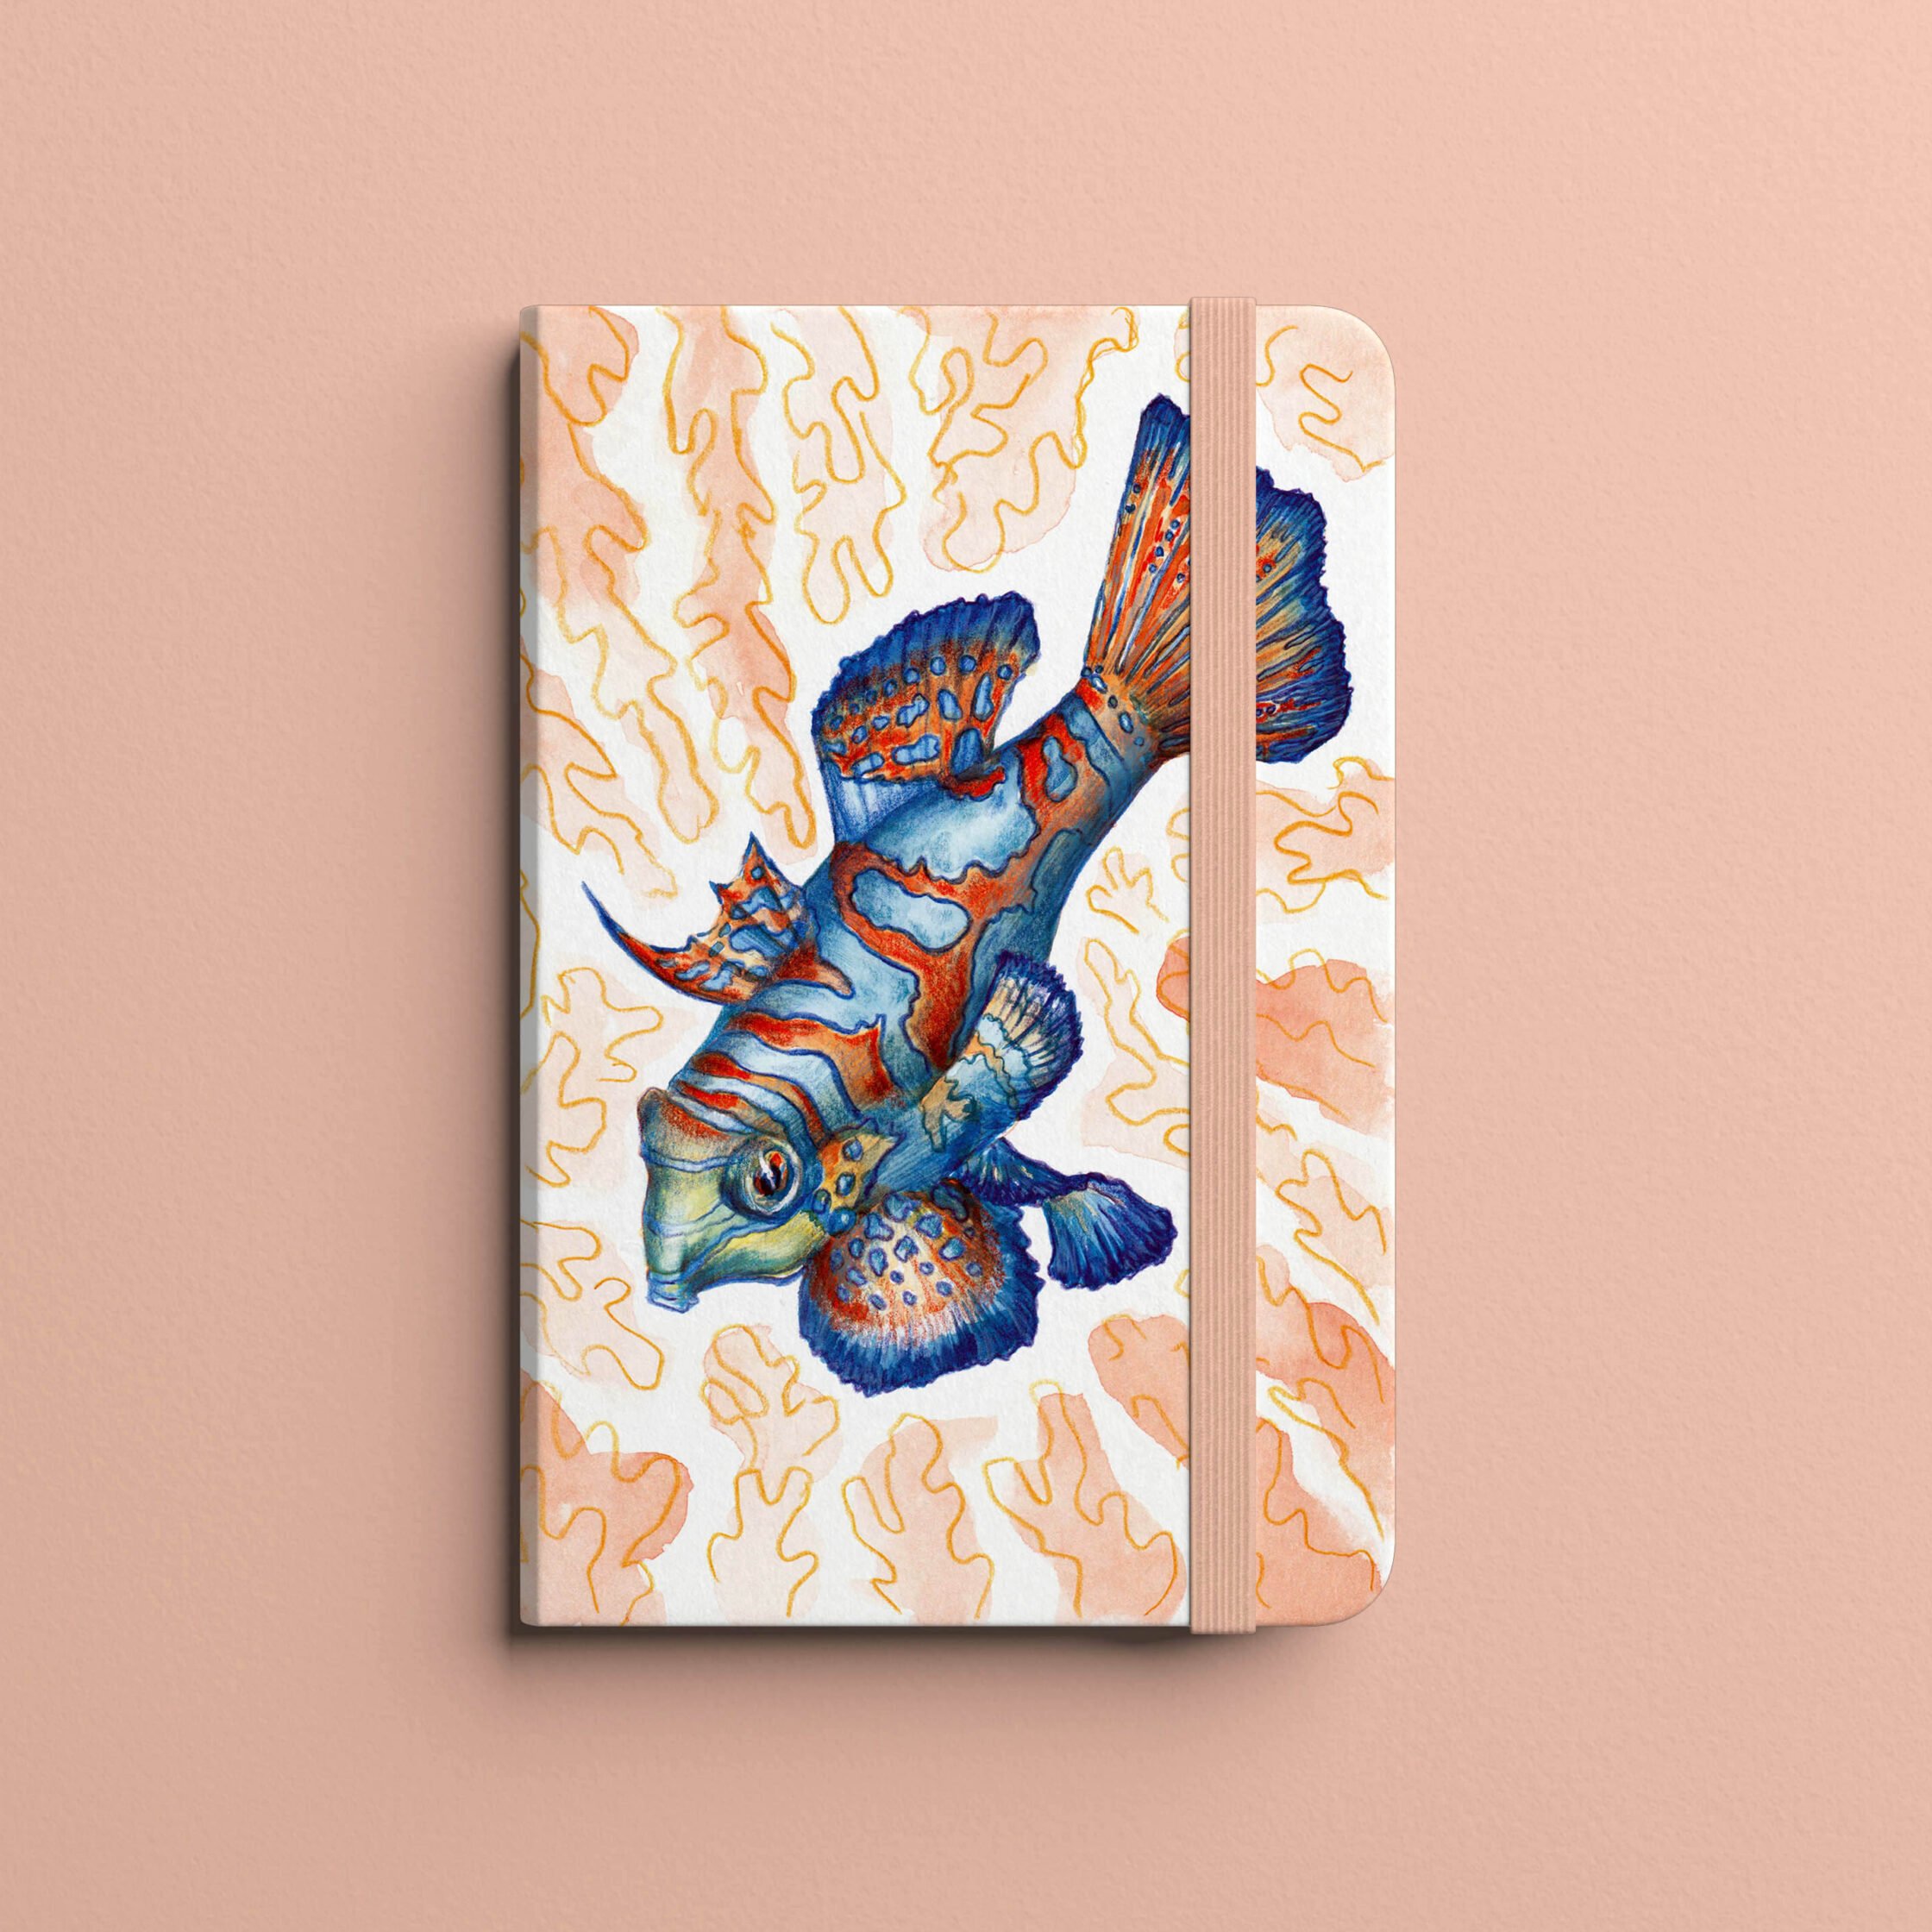 Mandarin Fish Illustration in blue and orange hues.